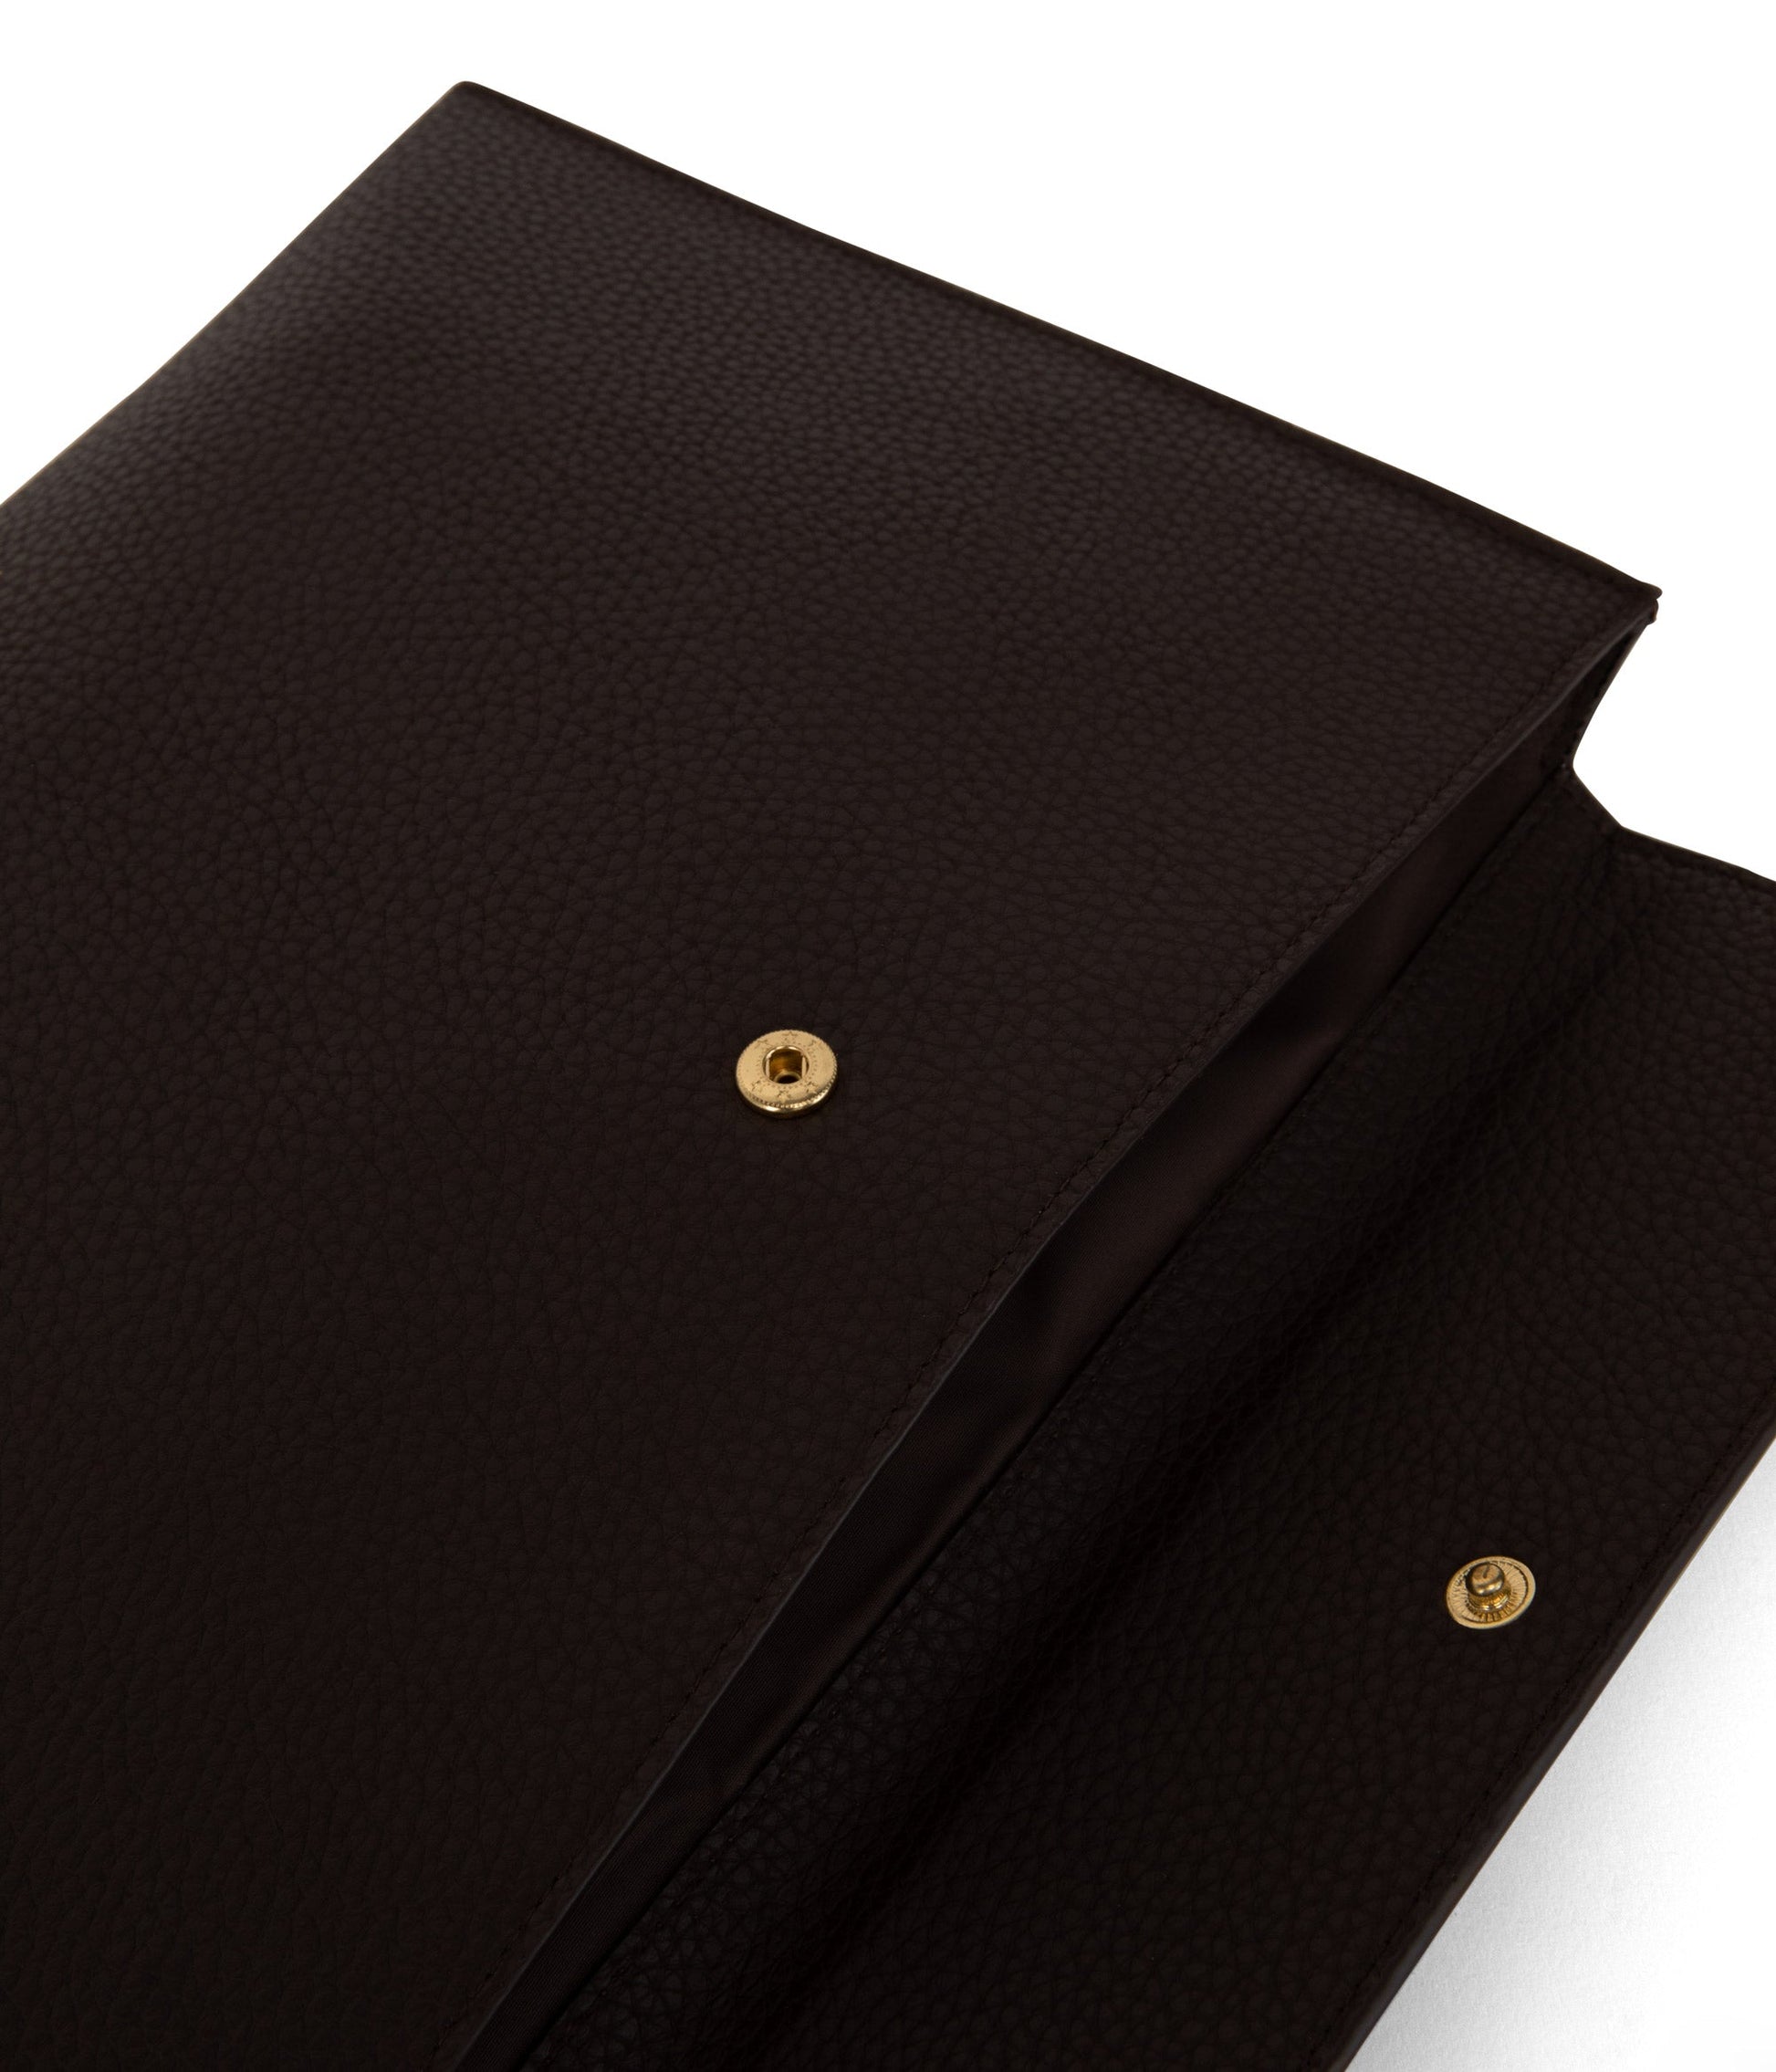 KIT 129 Vegan iPad Pro Case - Purity | Color: Brown - variant::truffle